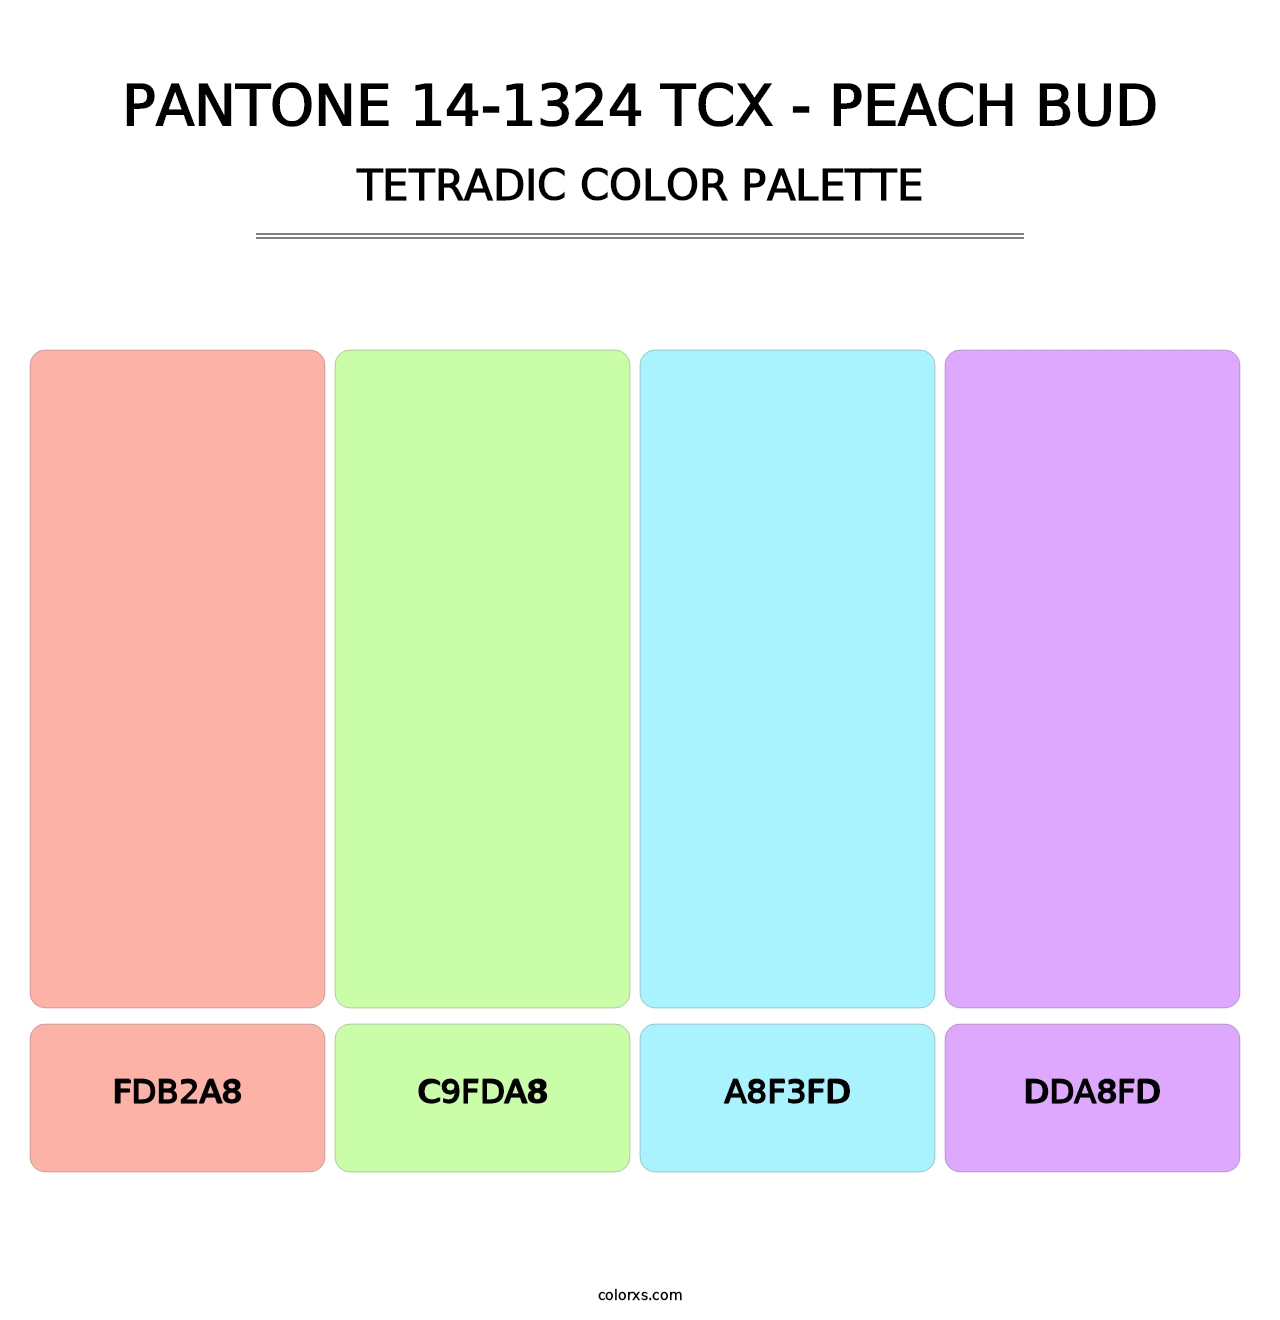 PANTONE 14-1324 TCX - Peach Bud - Tetradic Color Palette